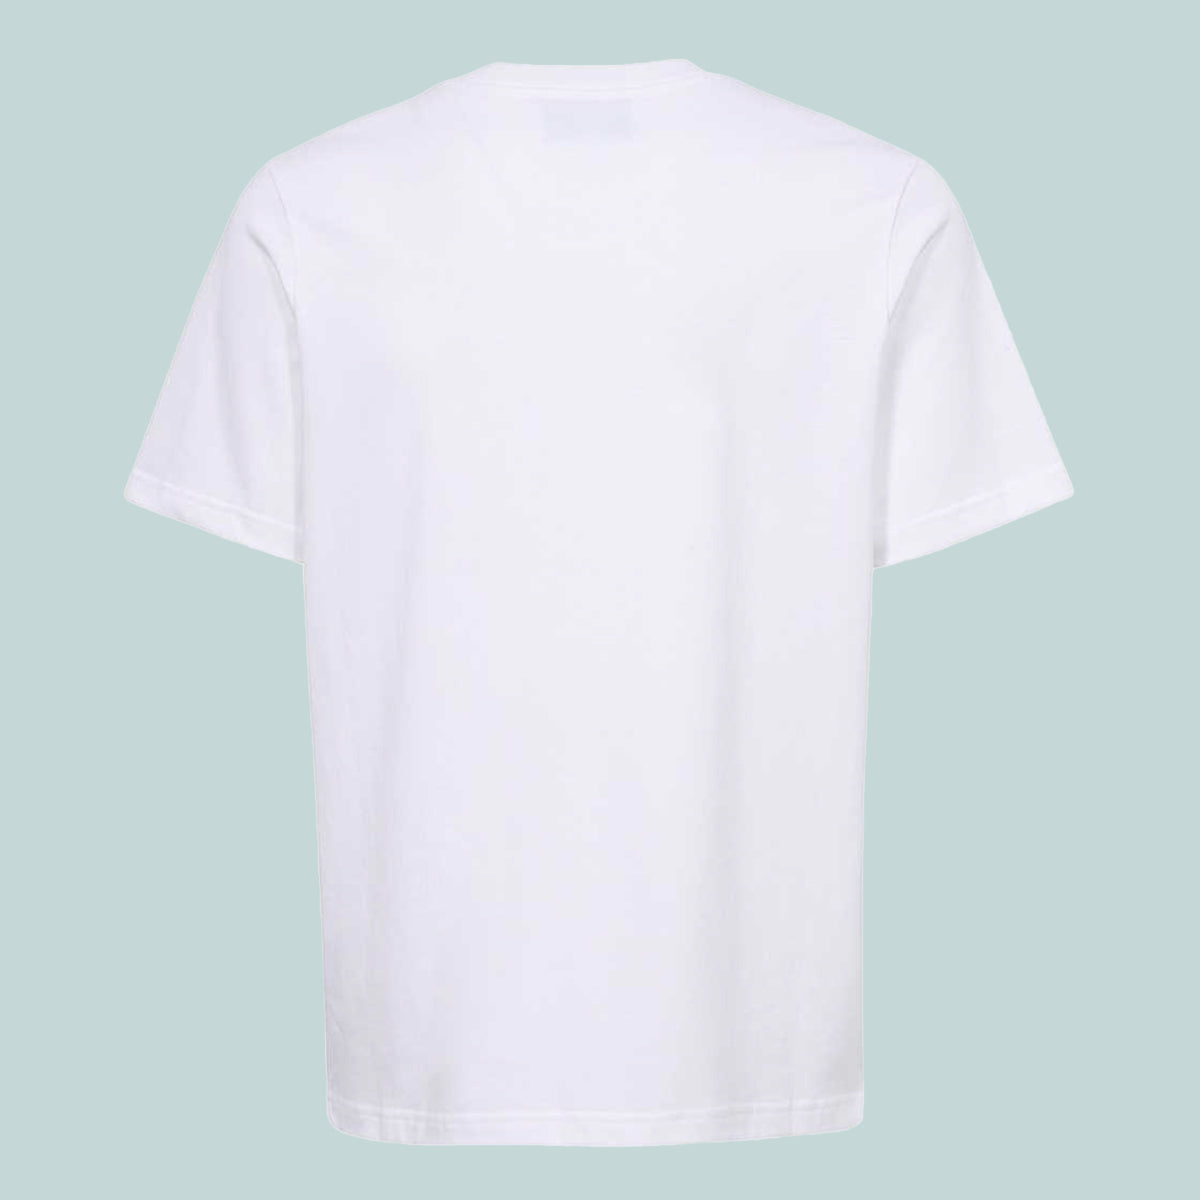 La Liaison Printed T-Shirt White